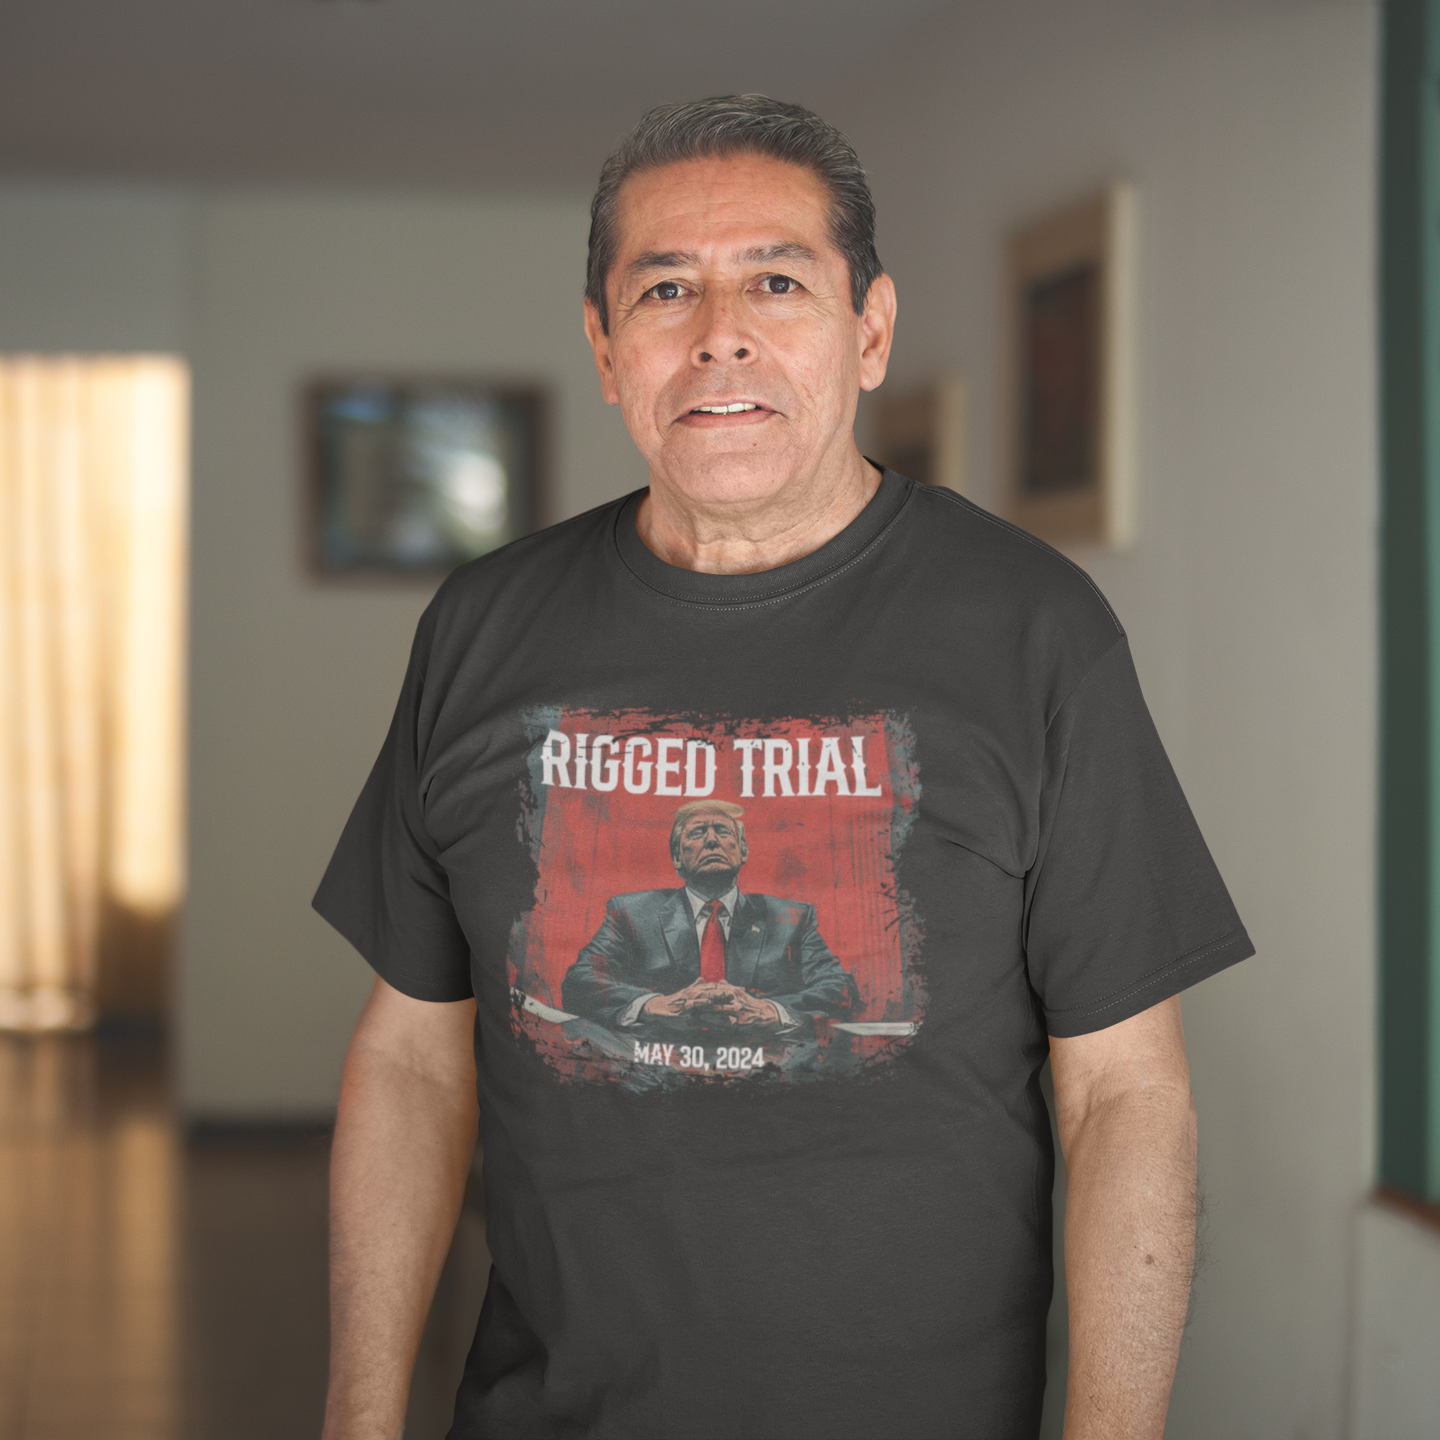 Trump Rigged Trial Shirt